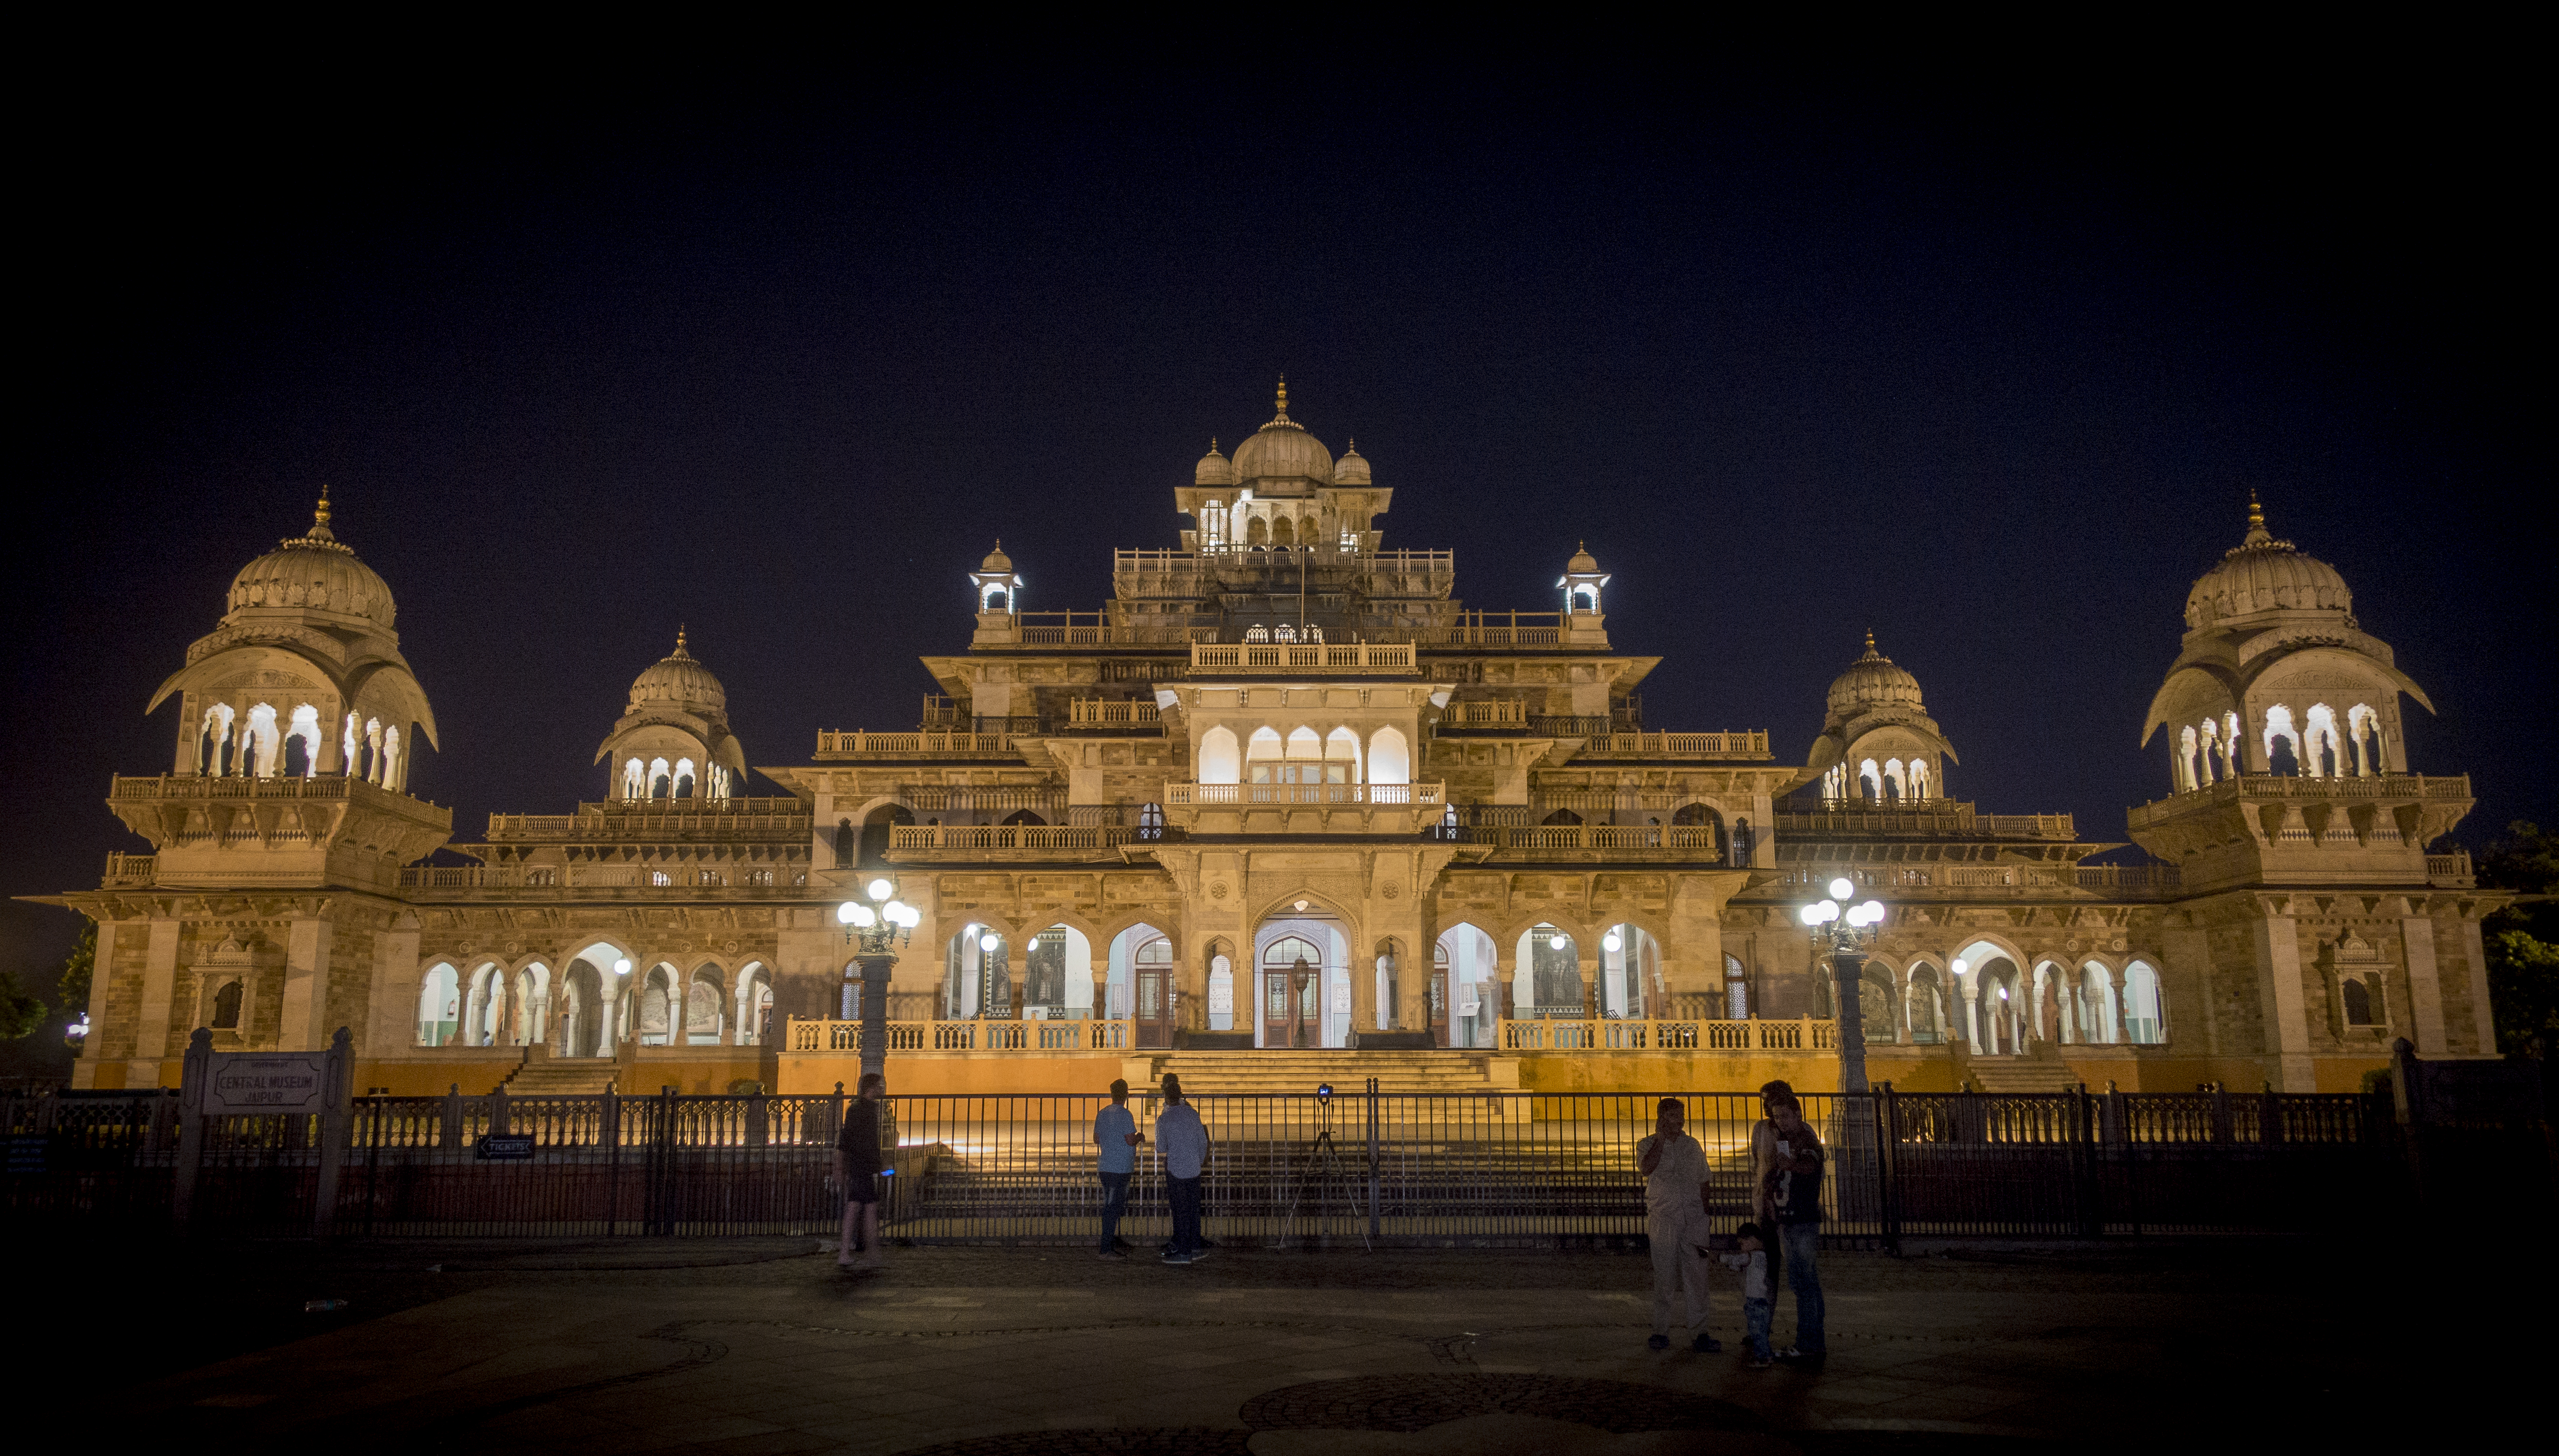 India: De Amritsar a Jaipur por carretera. - Viaje de 20 días por India y Nepal, con breve escala en Abu Dhabi. (5)